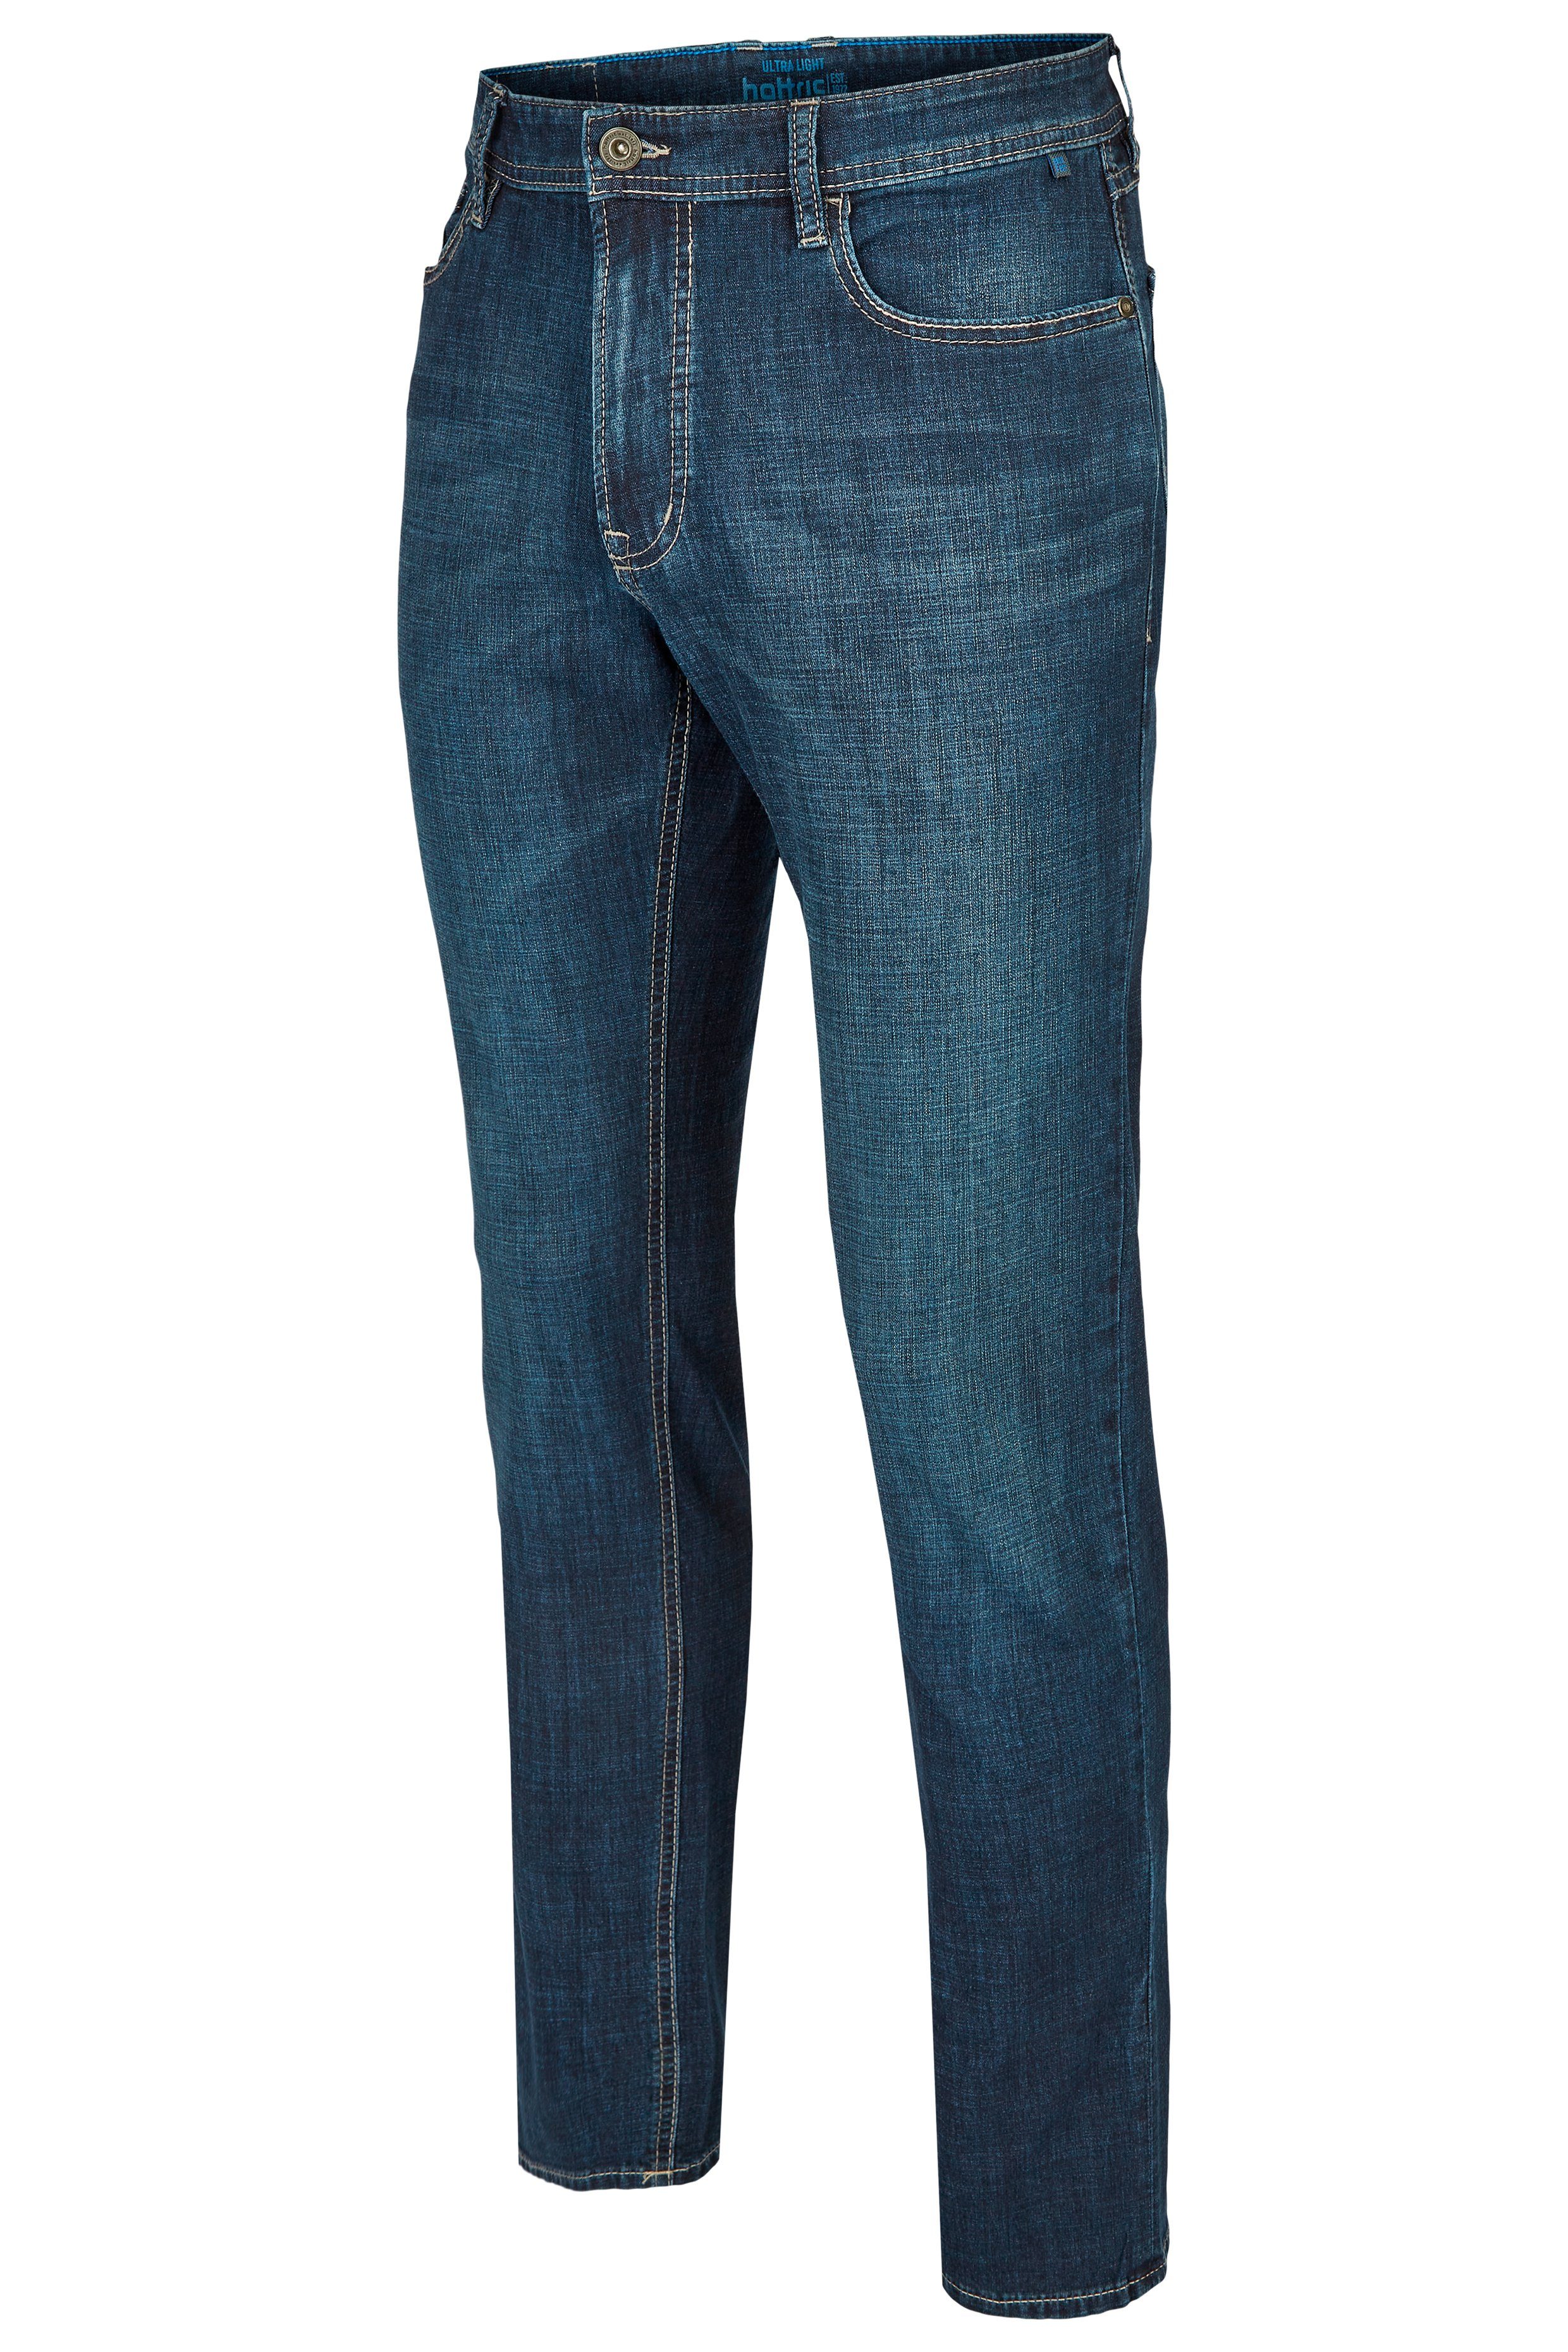 Hattric 5-Pocket-Jeans HATTRIC HUNTER 688275 LIGHT - 5647.48 indigo ULTRA dark